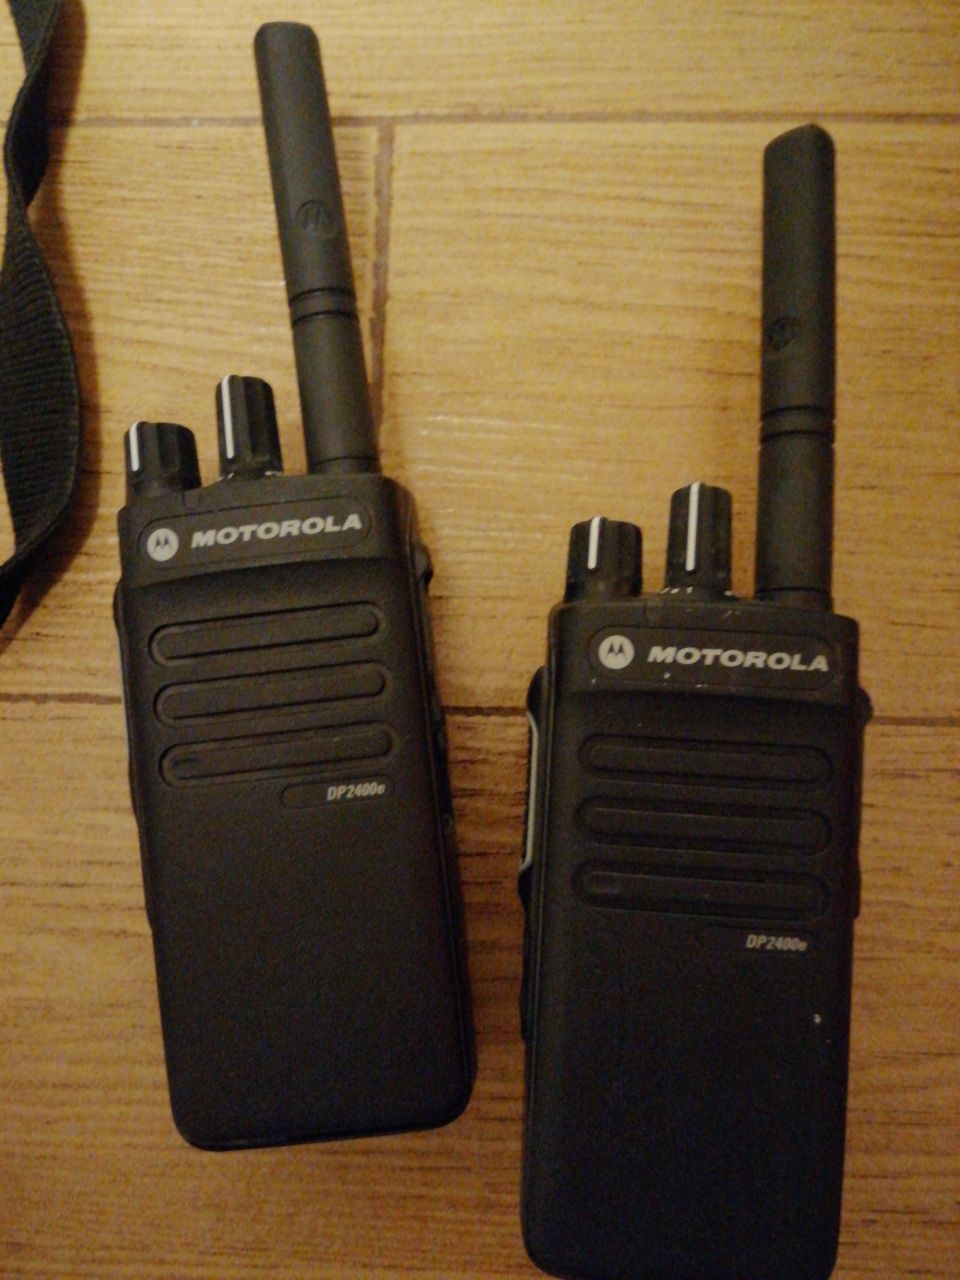 Radio walkie talkie Motorola analogico/digital